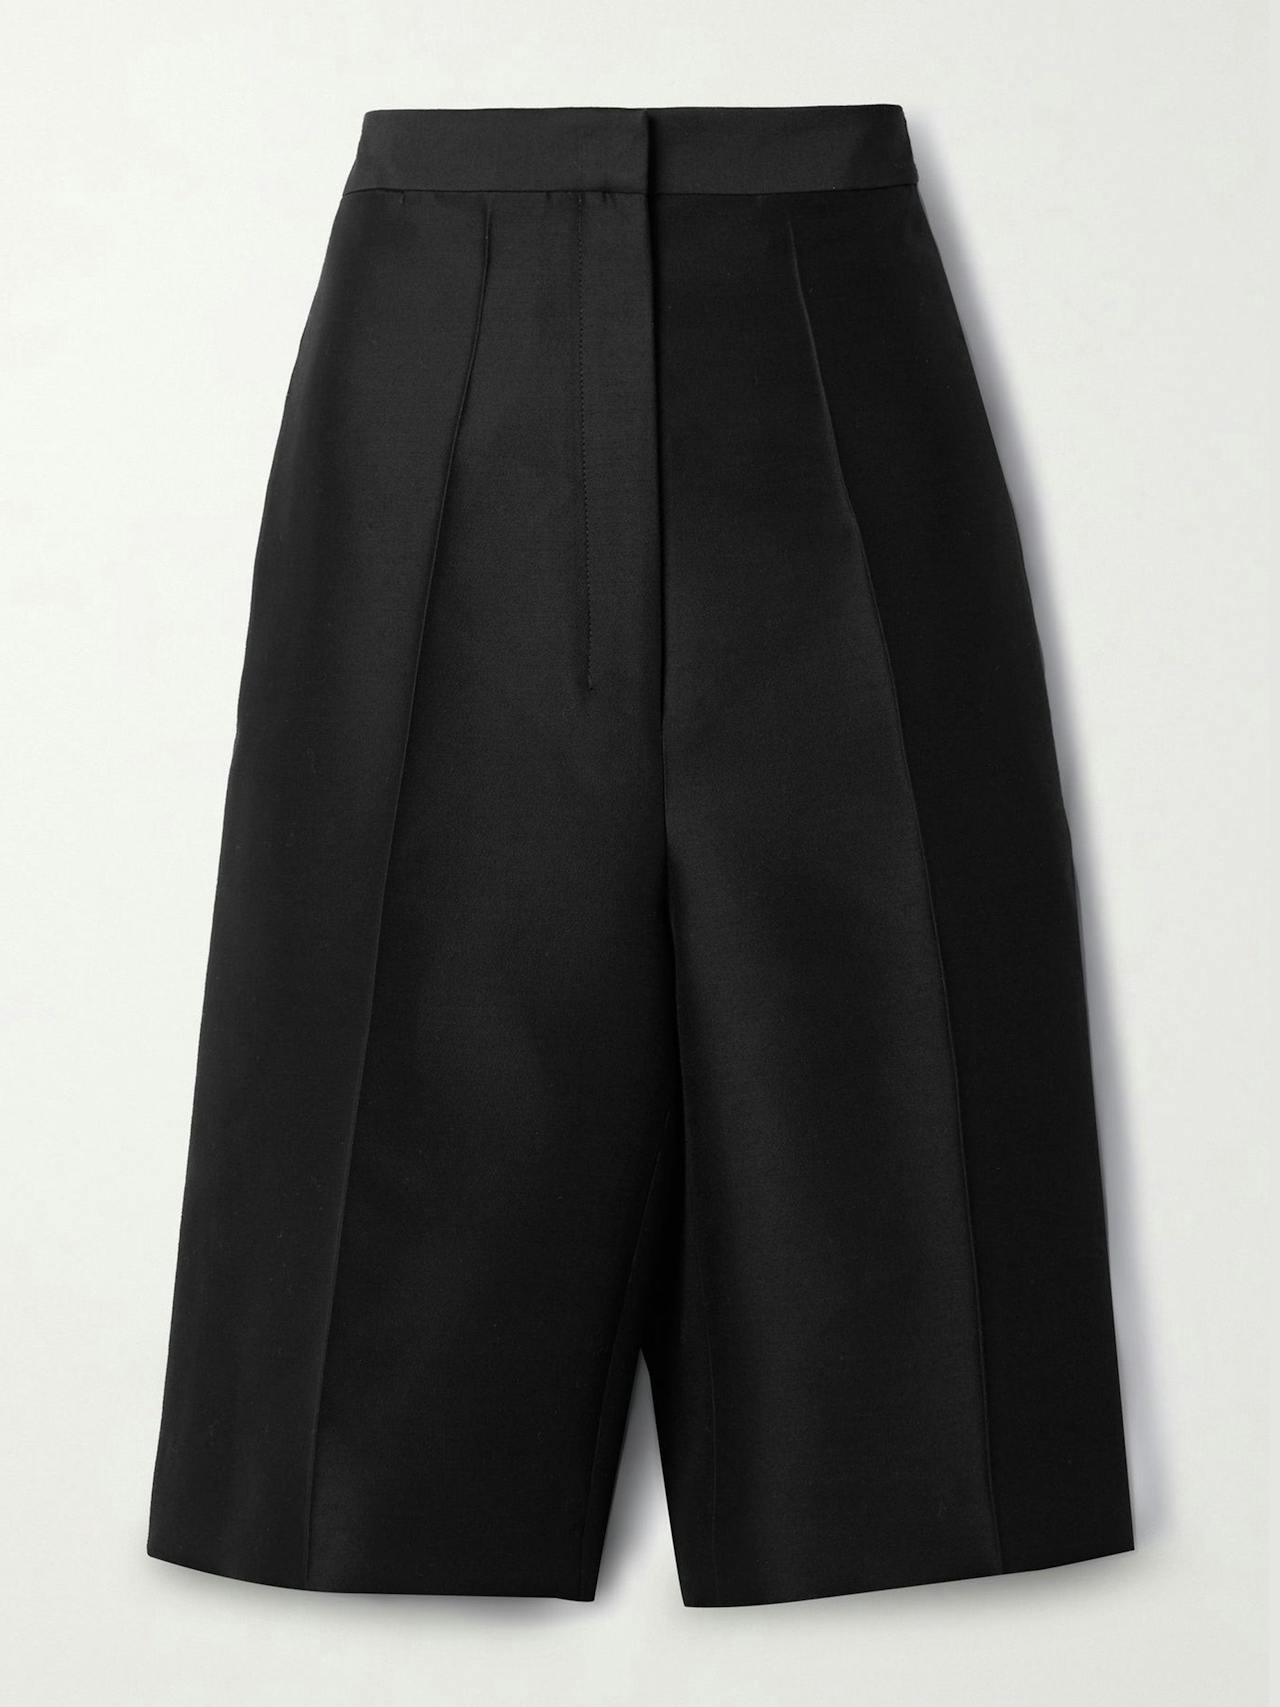 Black wool and silk-blend shorts